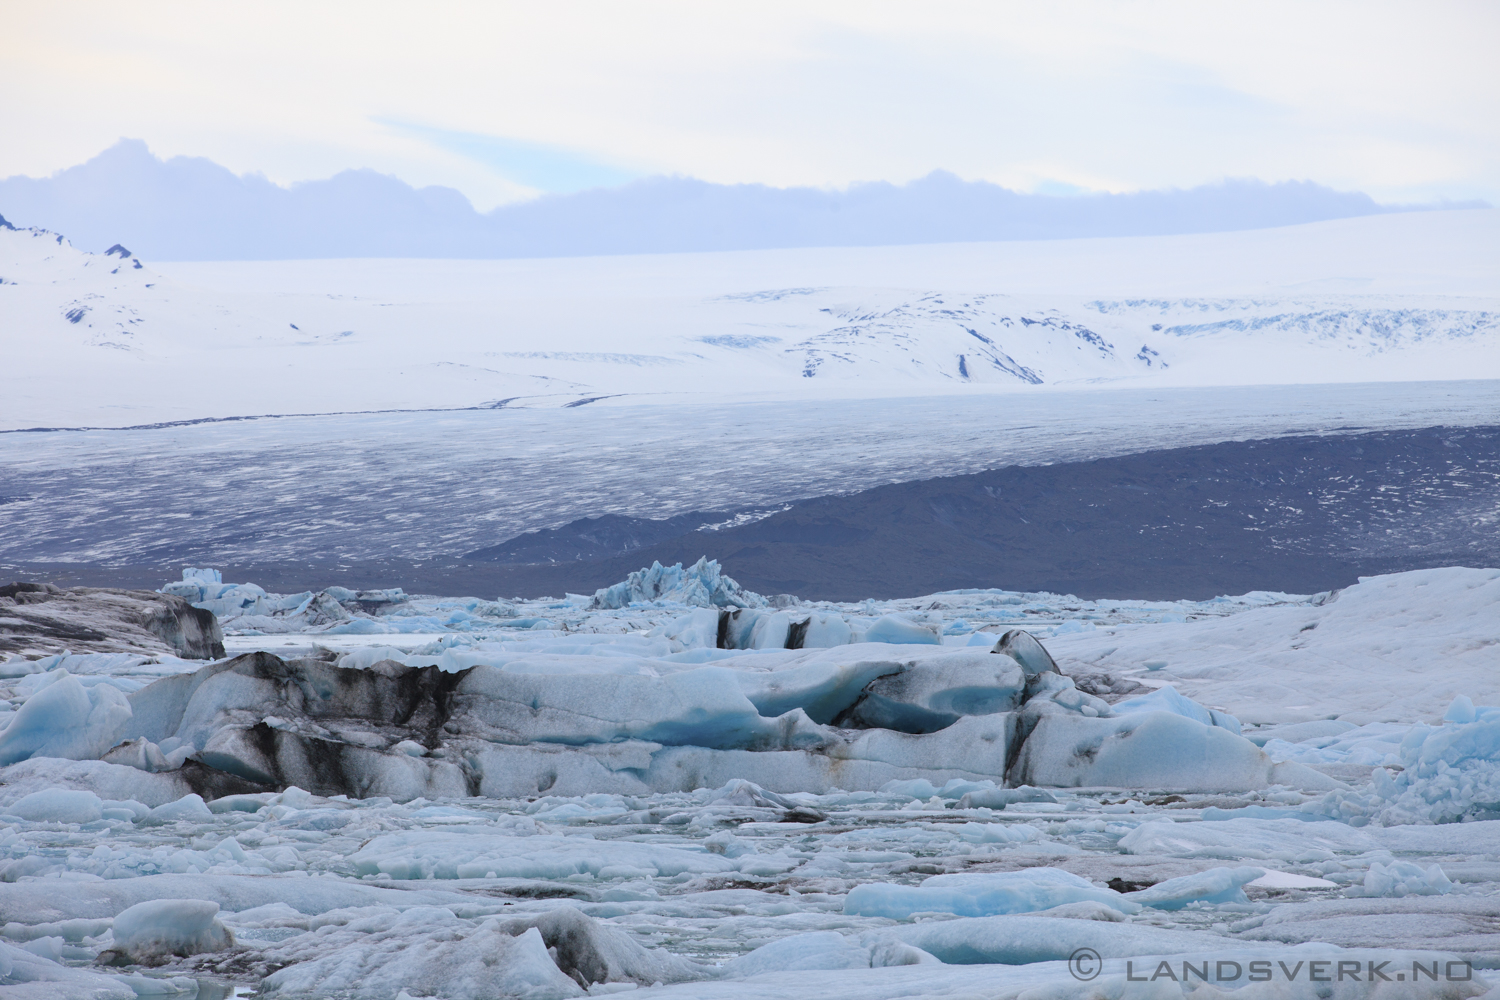 Jökulsárlón glacier lagoon. 

(Canon EOS 5D Mark II / Canon EF 70-200mm f/2.8 L IS II USM)